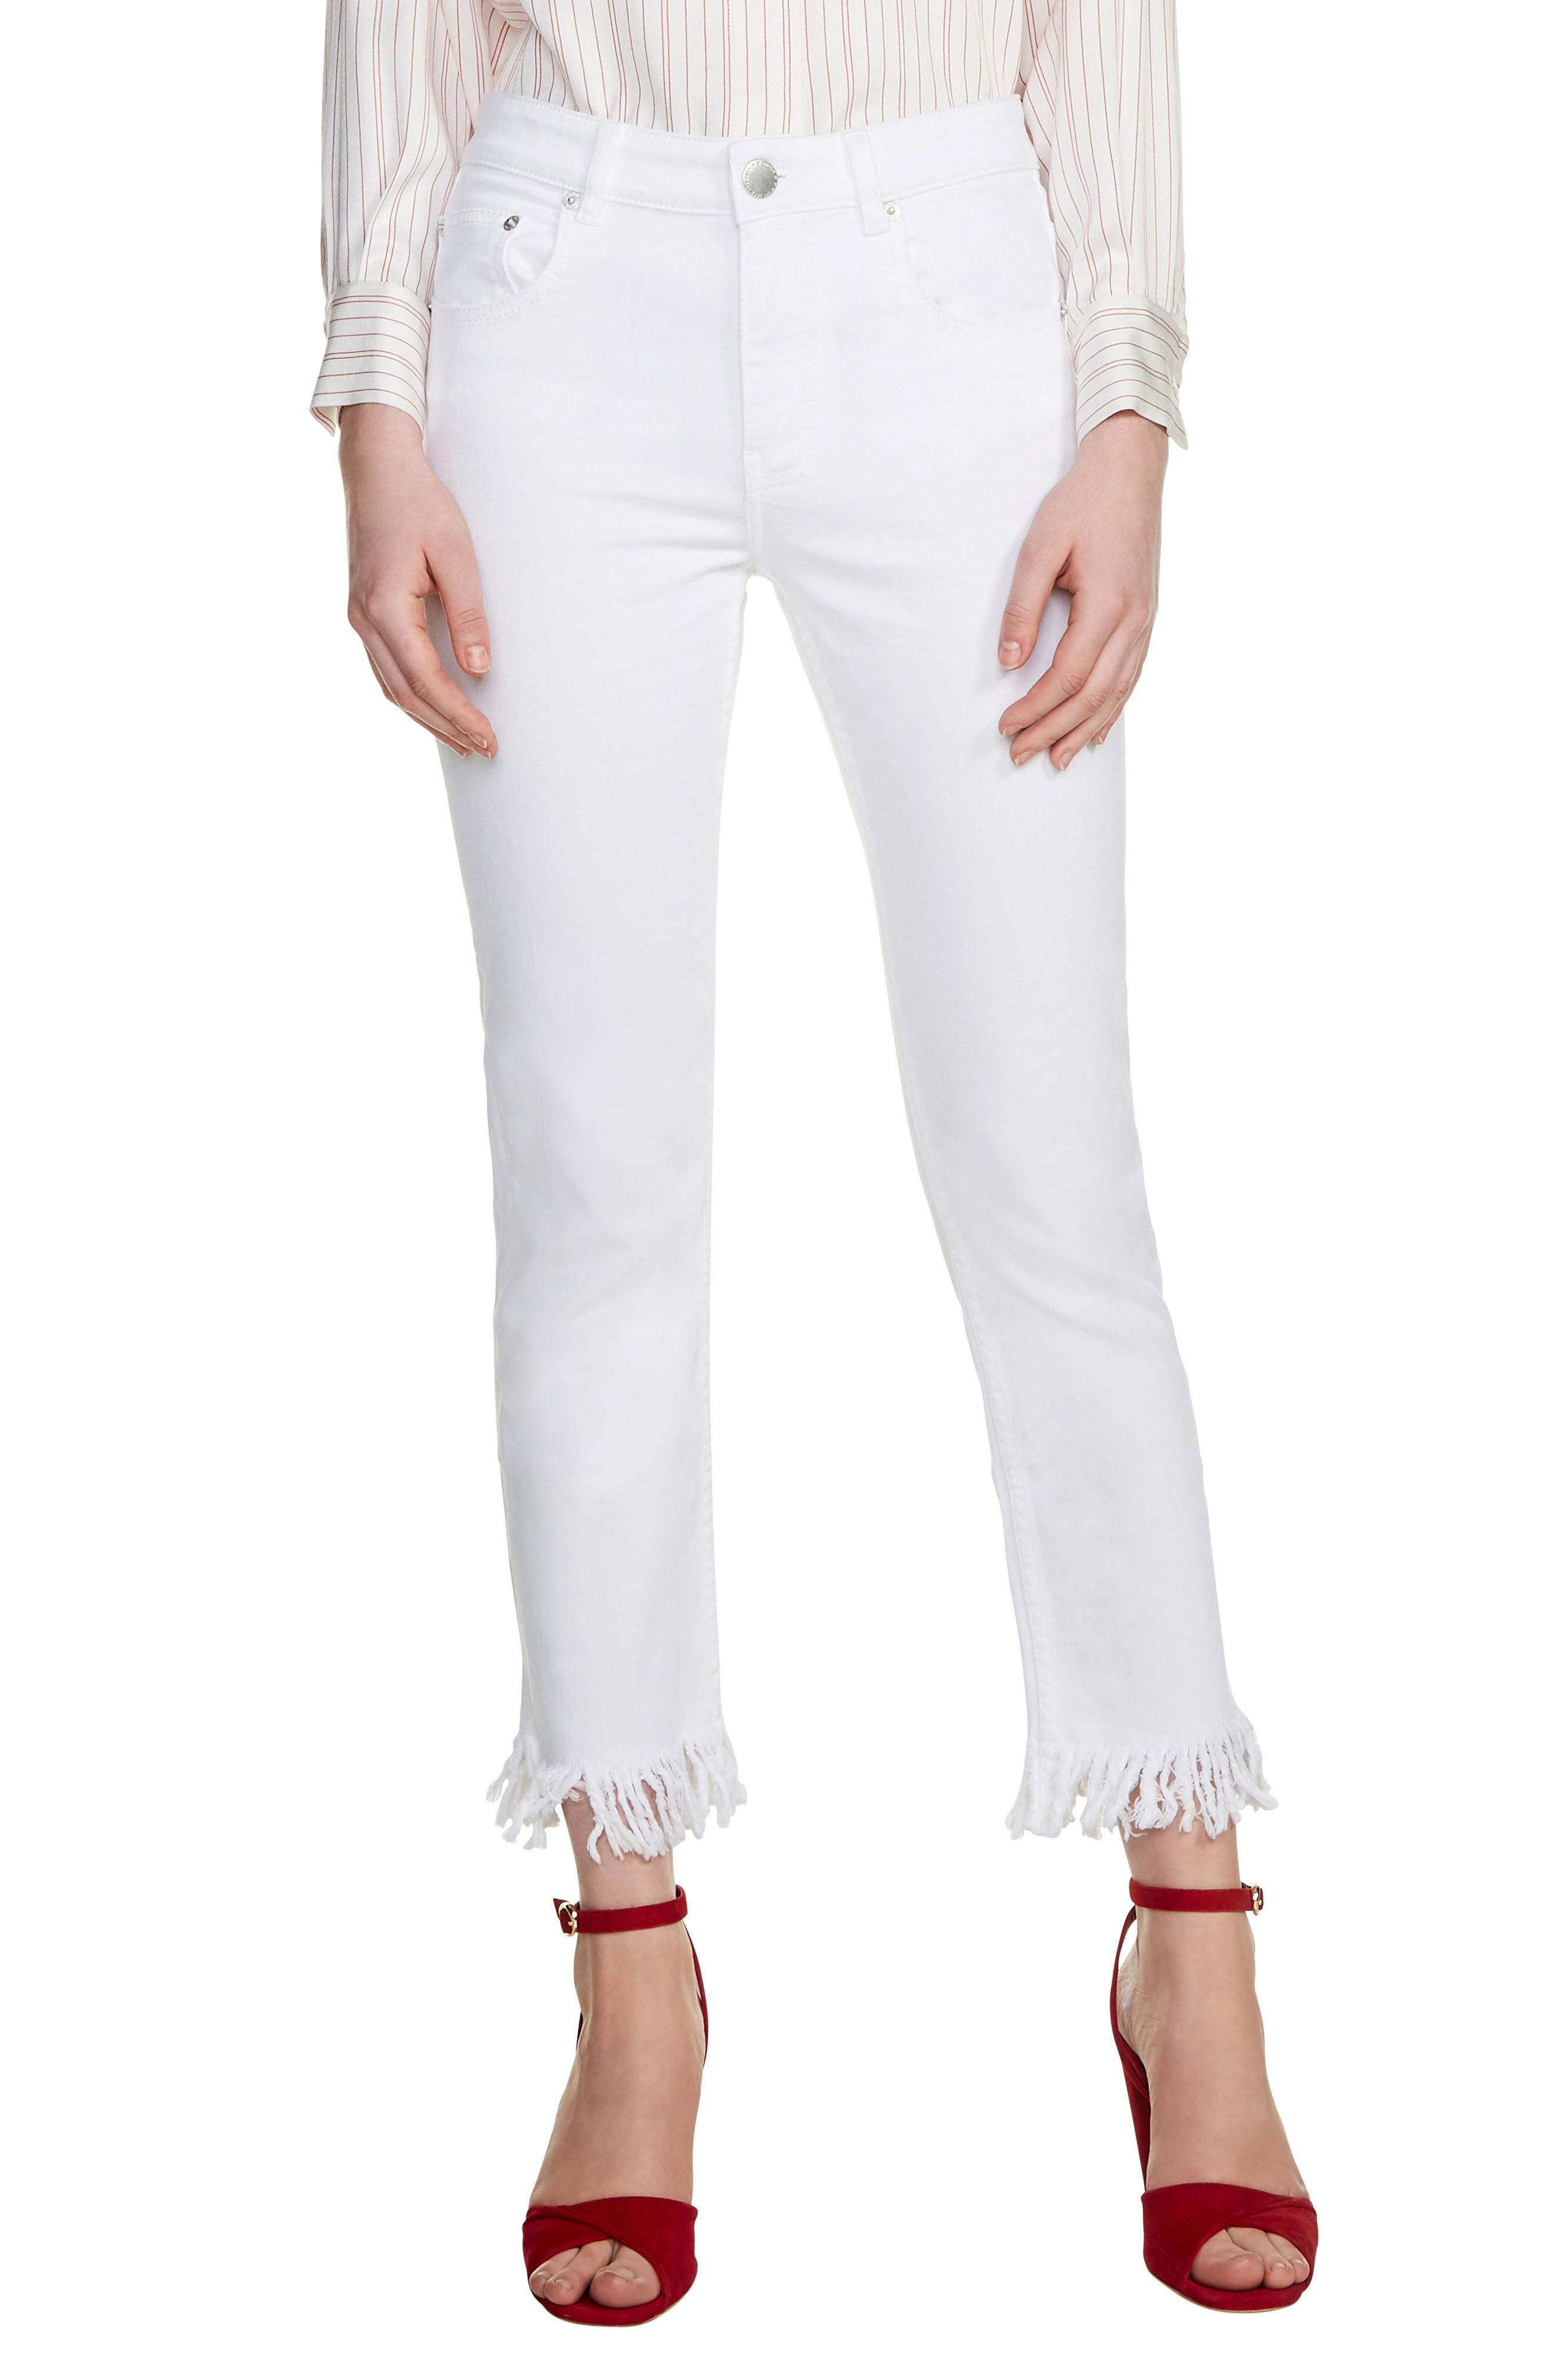 white fringed jeans